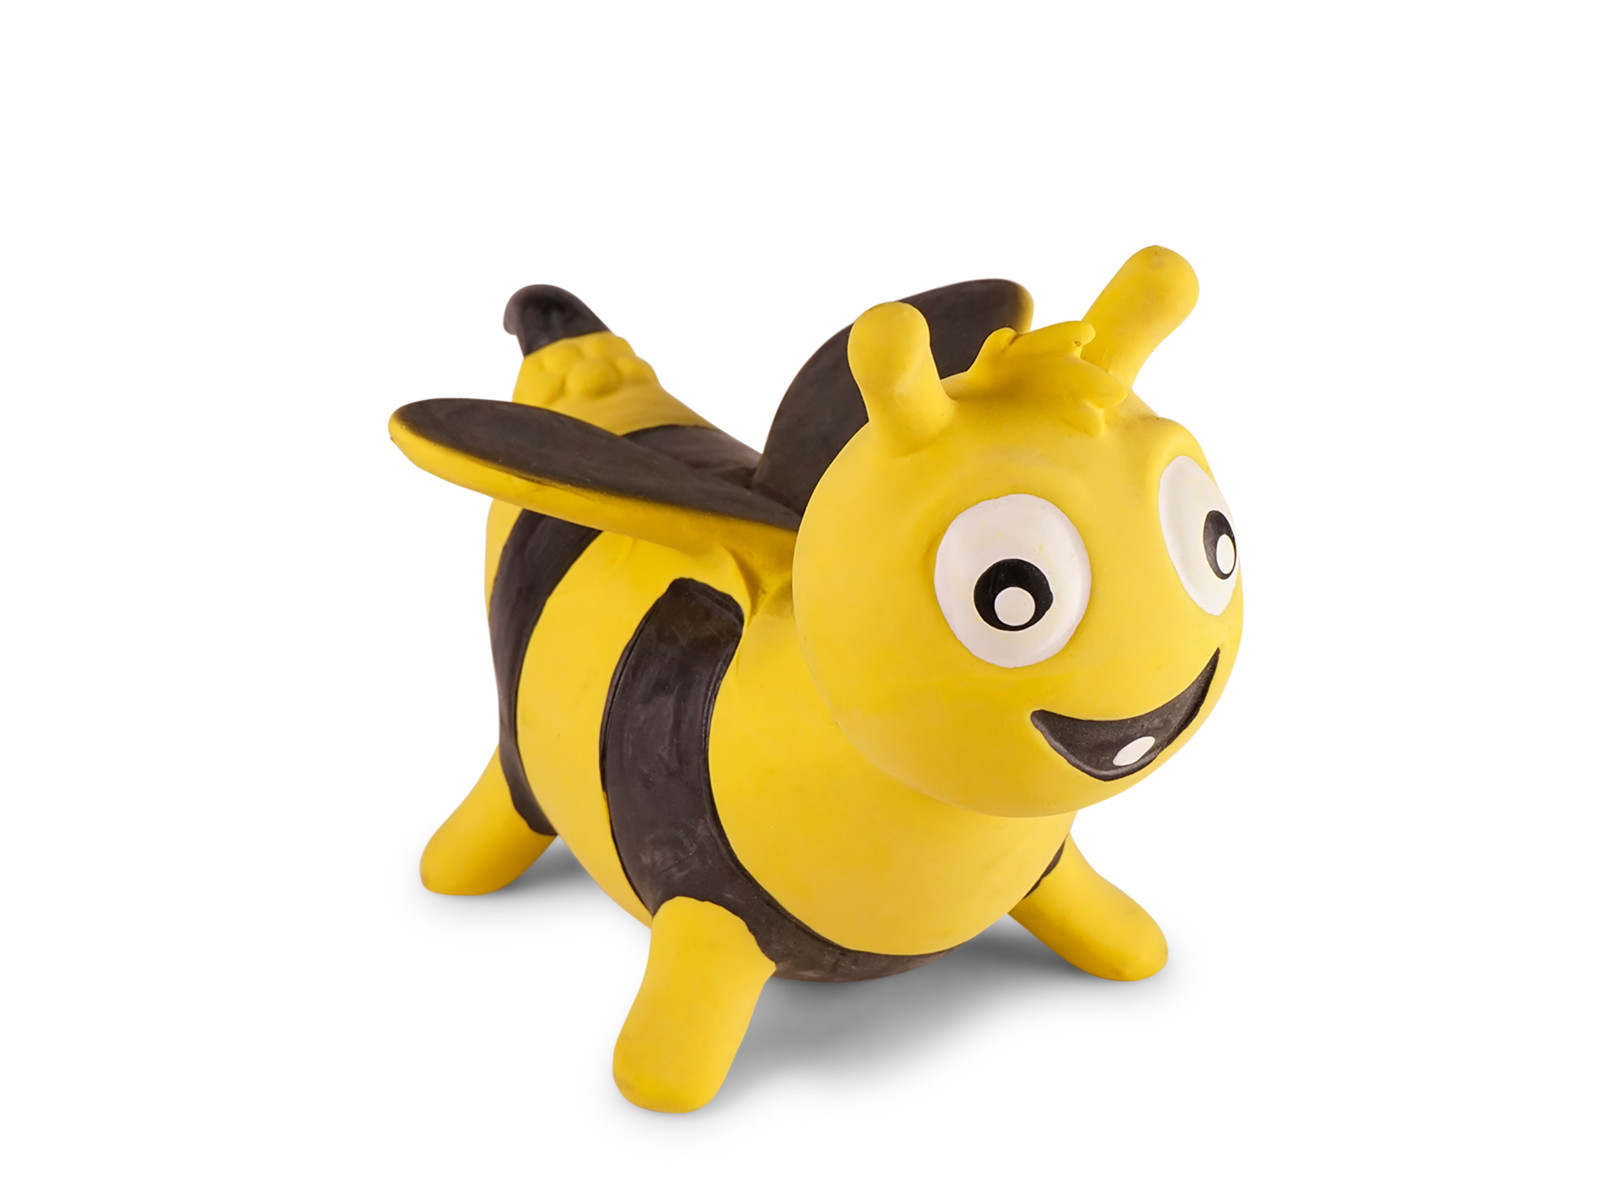 Brinquedo abelha de látex